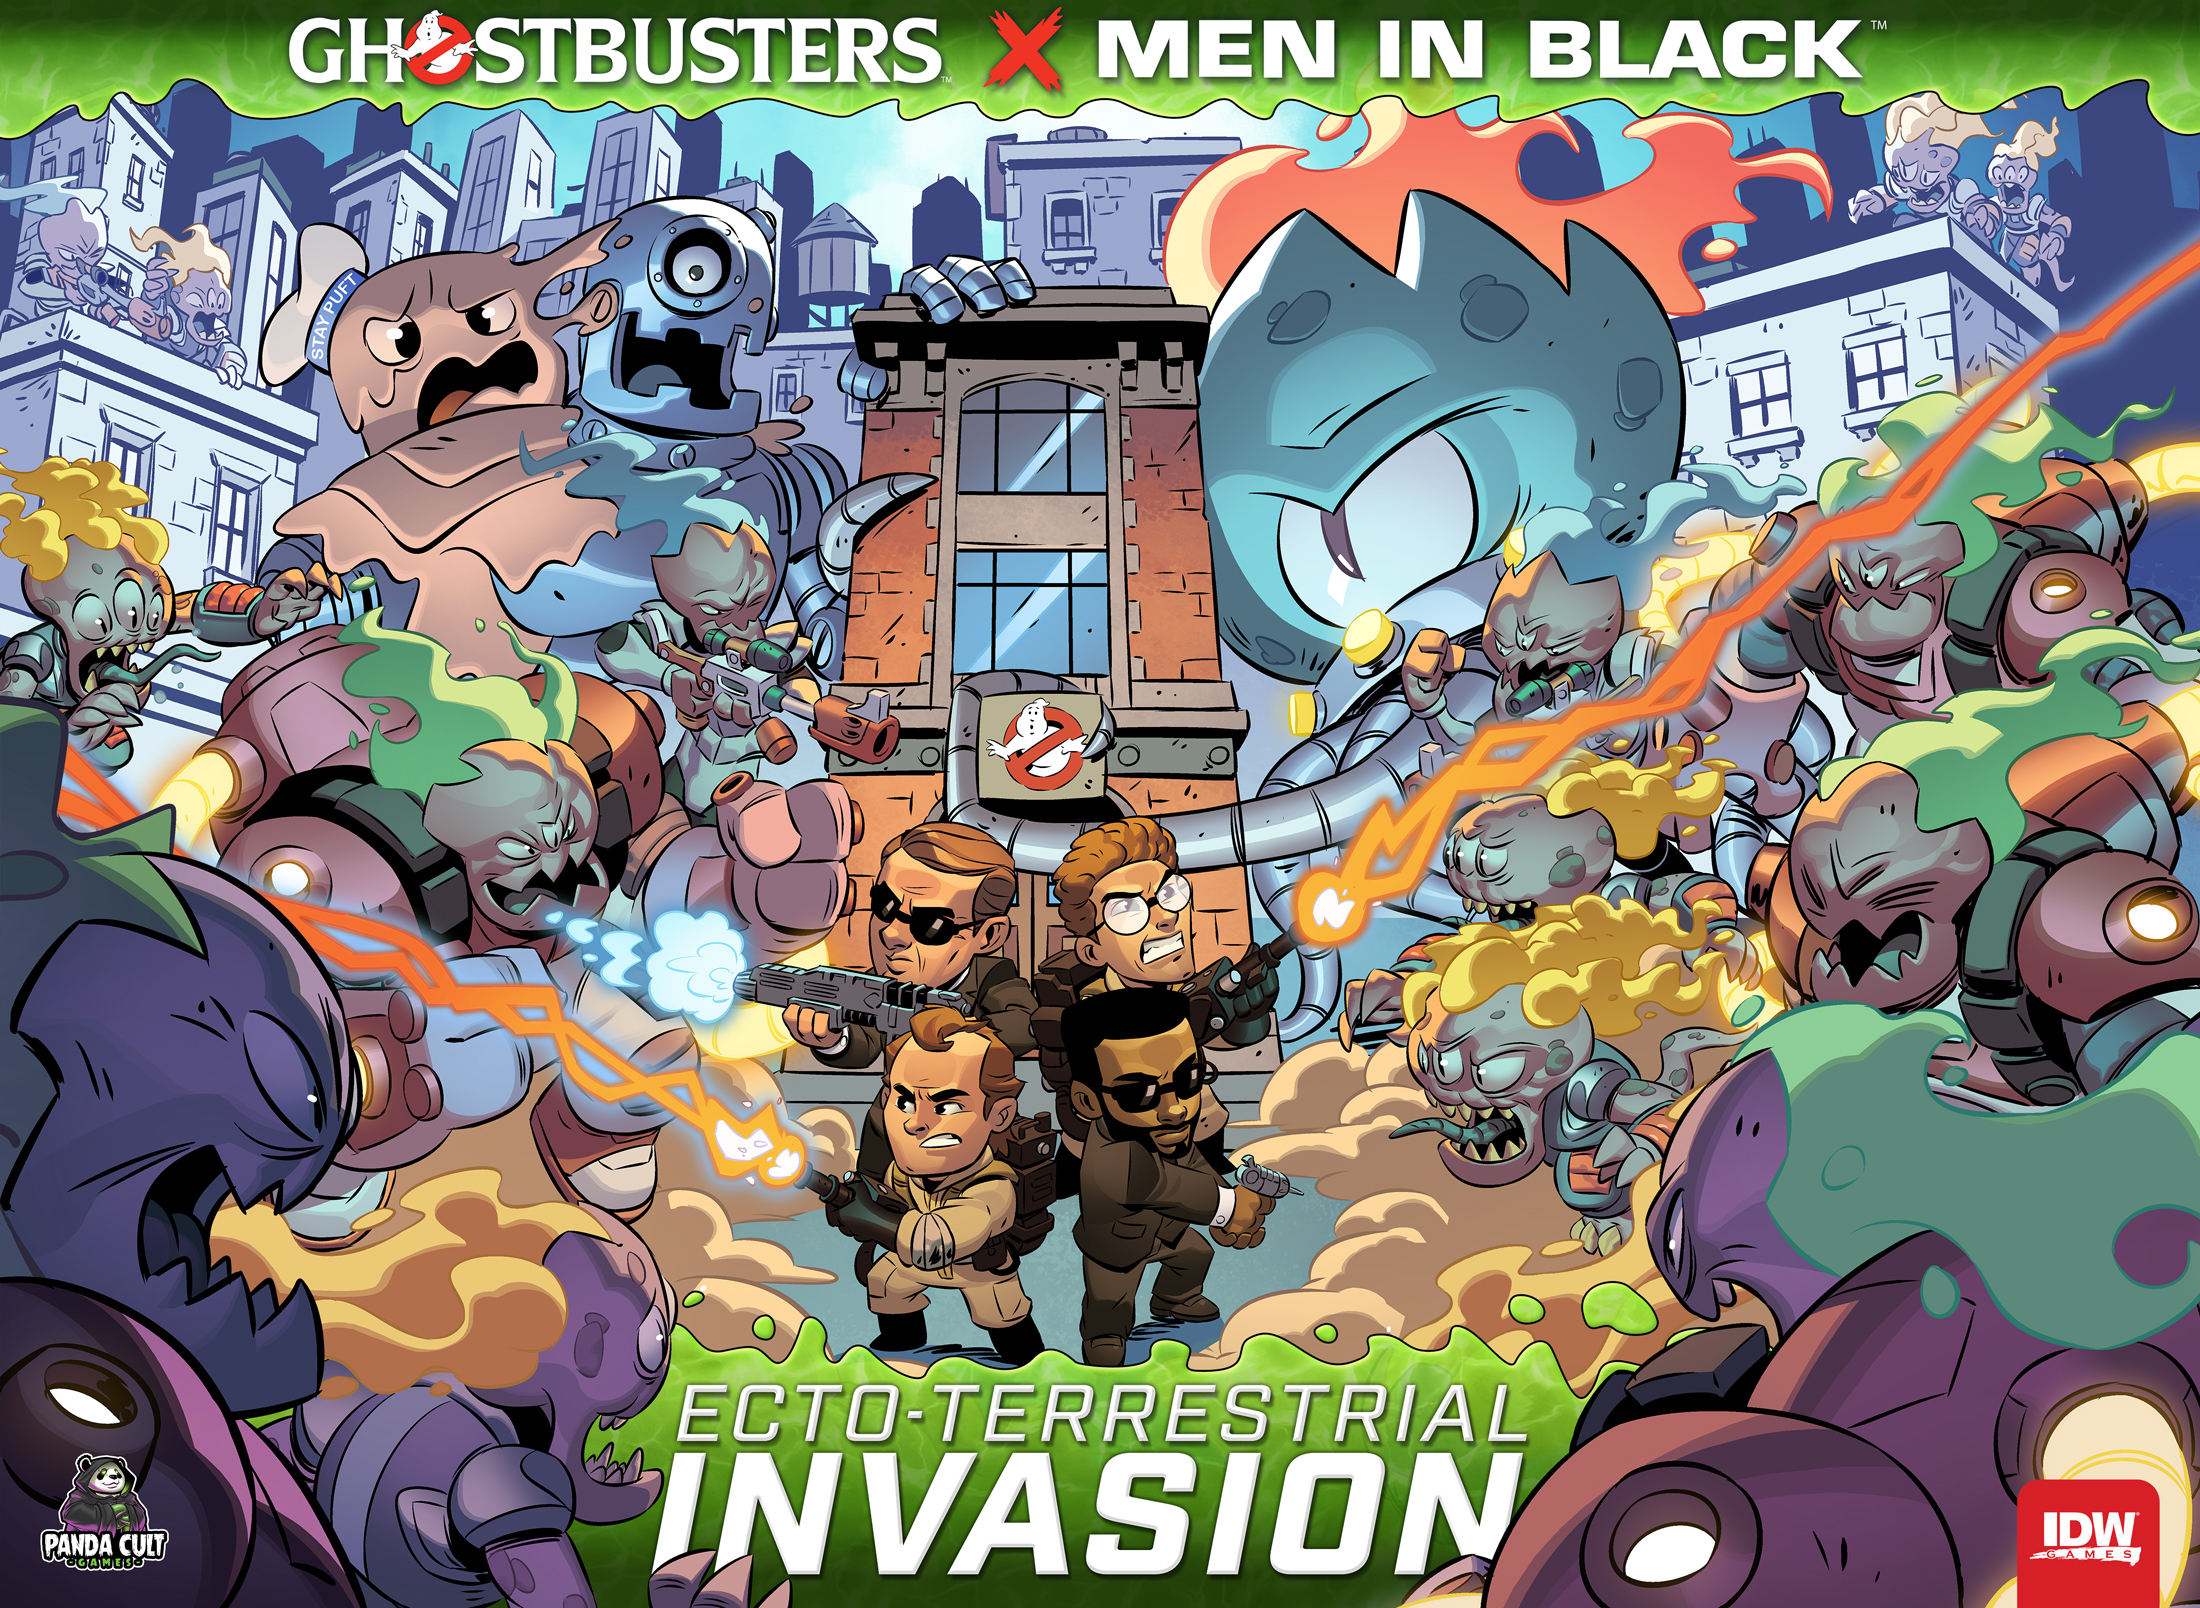 GTM #254 - Ghostbusters/Men In Black: Ecto-Terrestrial Invasion